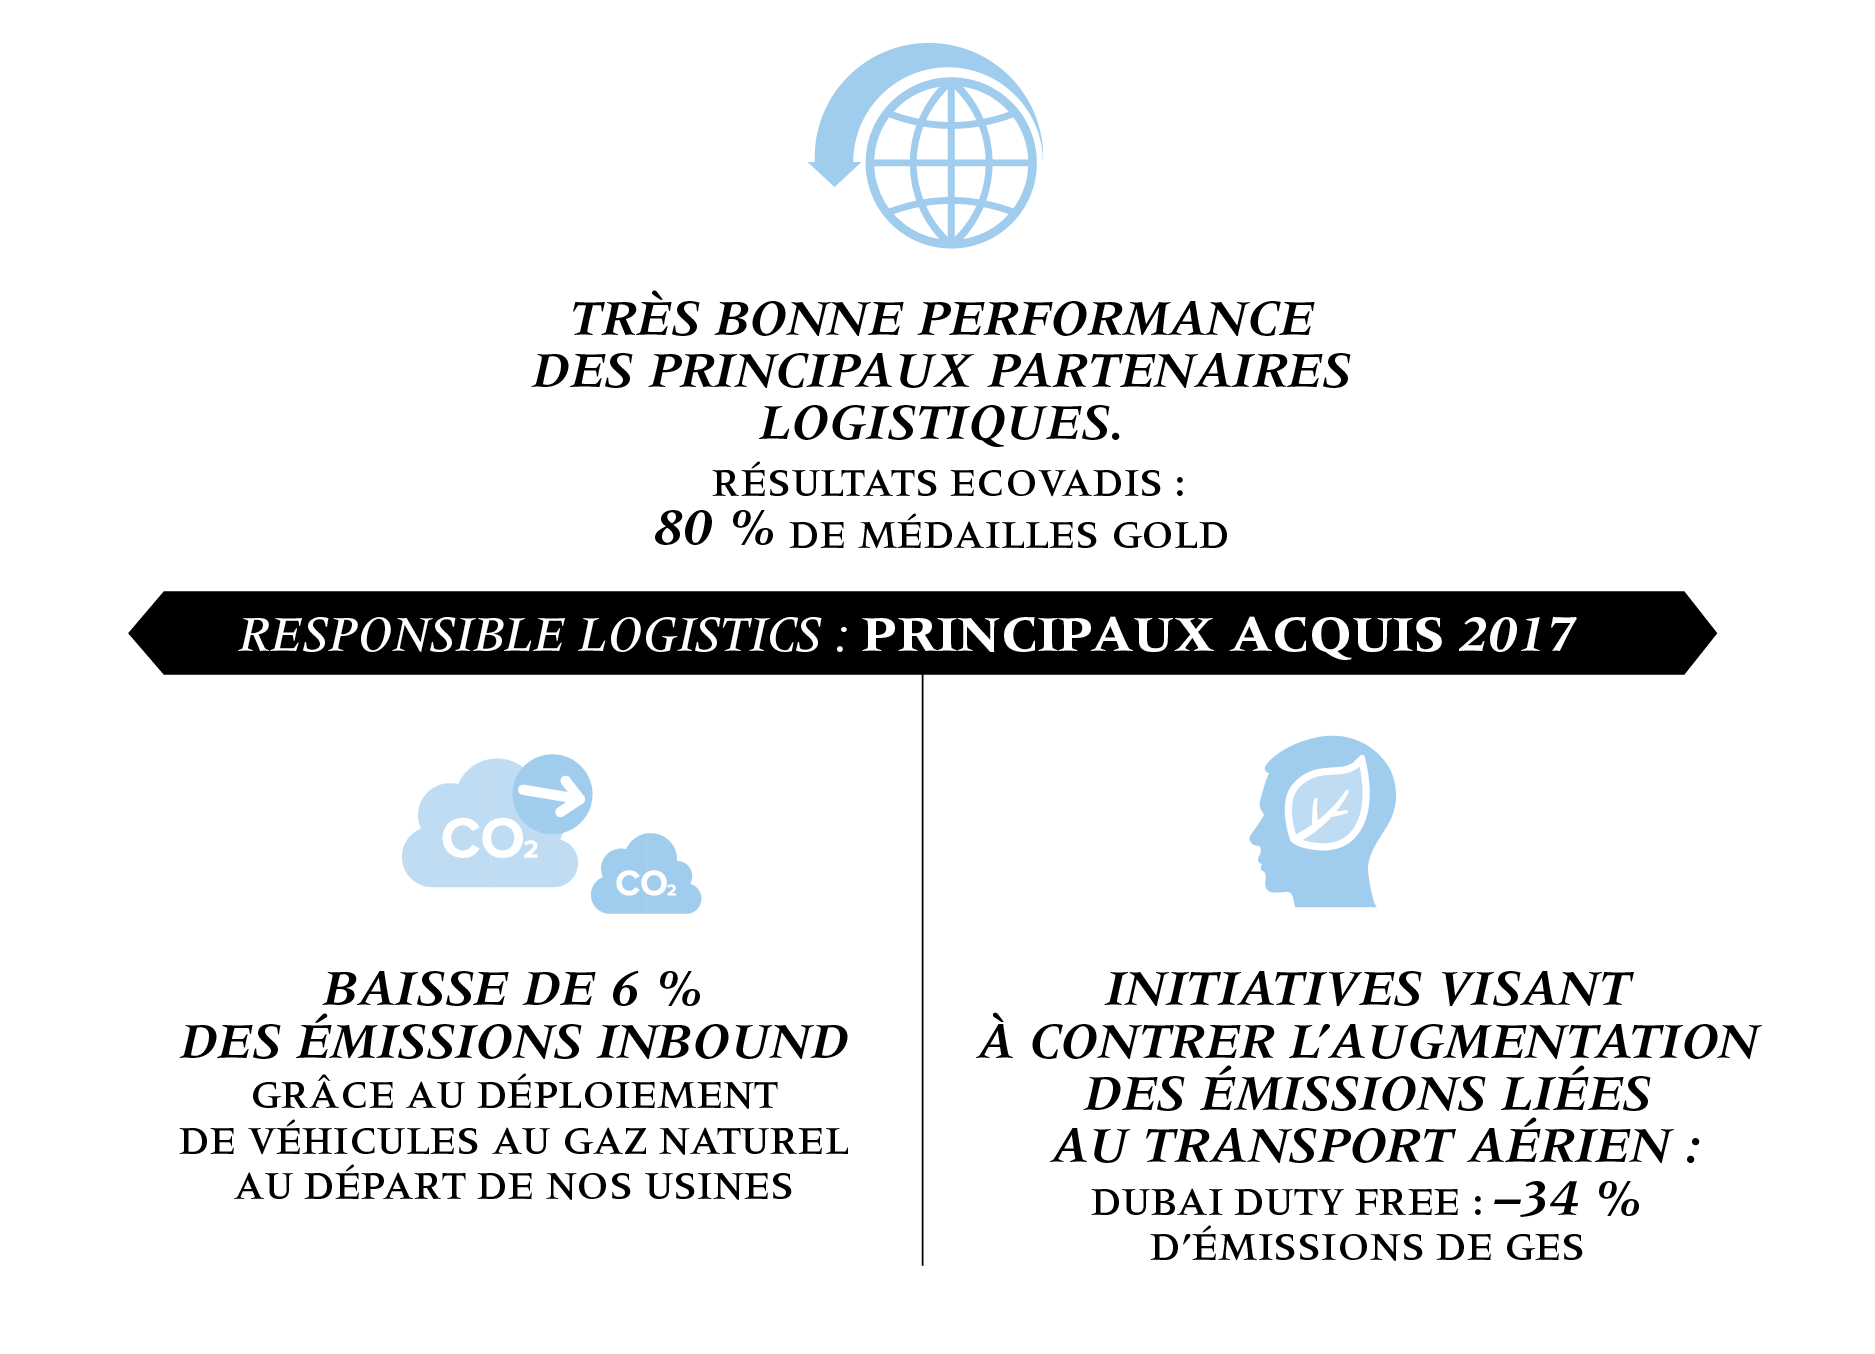 Responsible logistics : Principaux acquis 2017